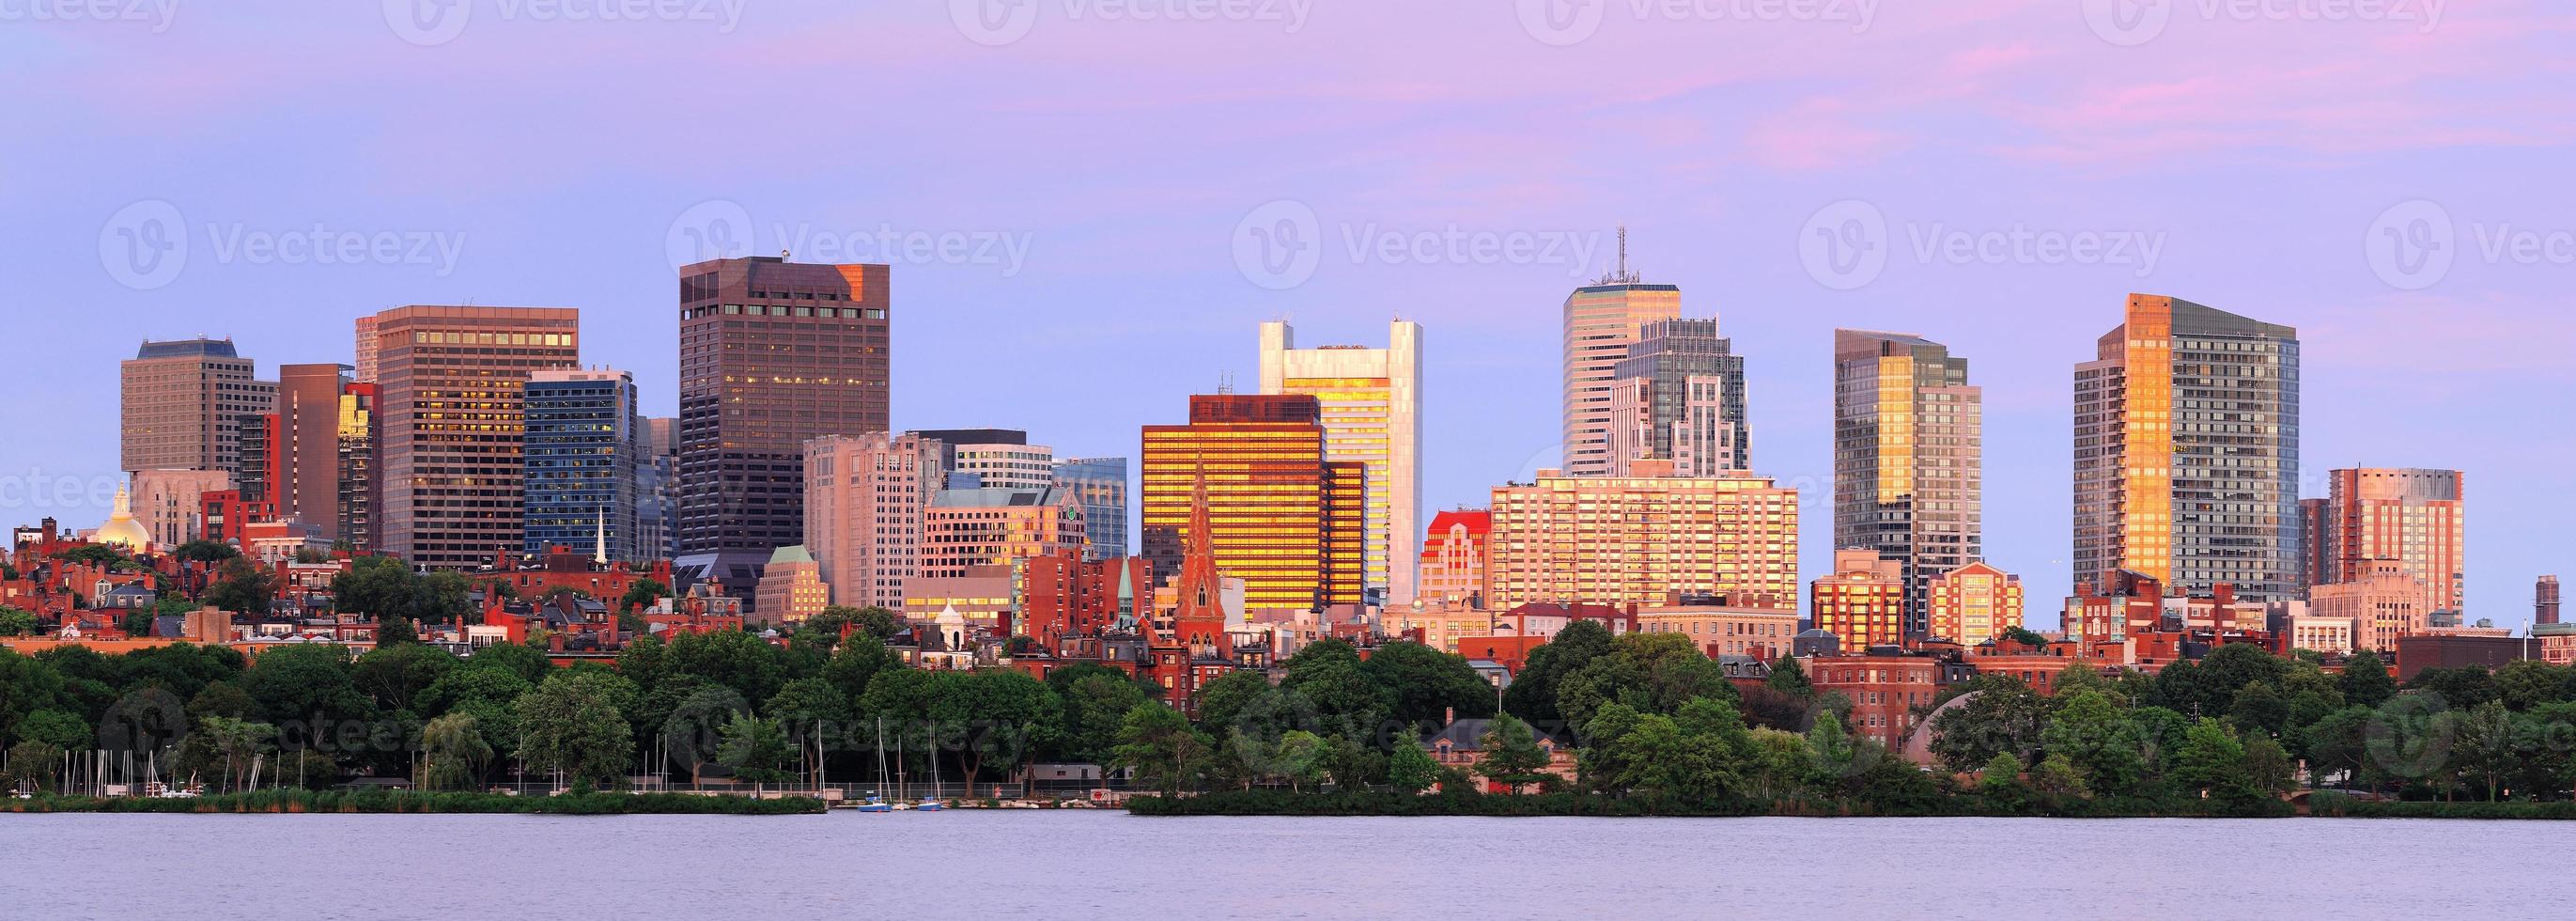 Charles River zonsondergang foto